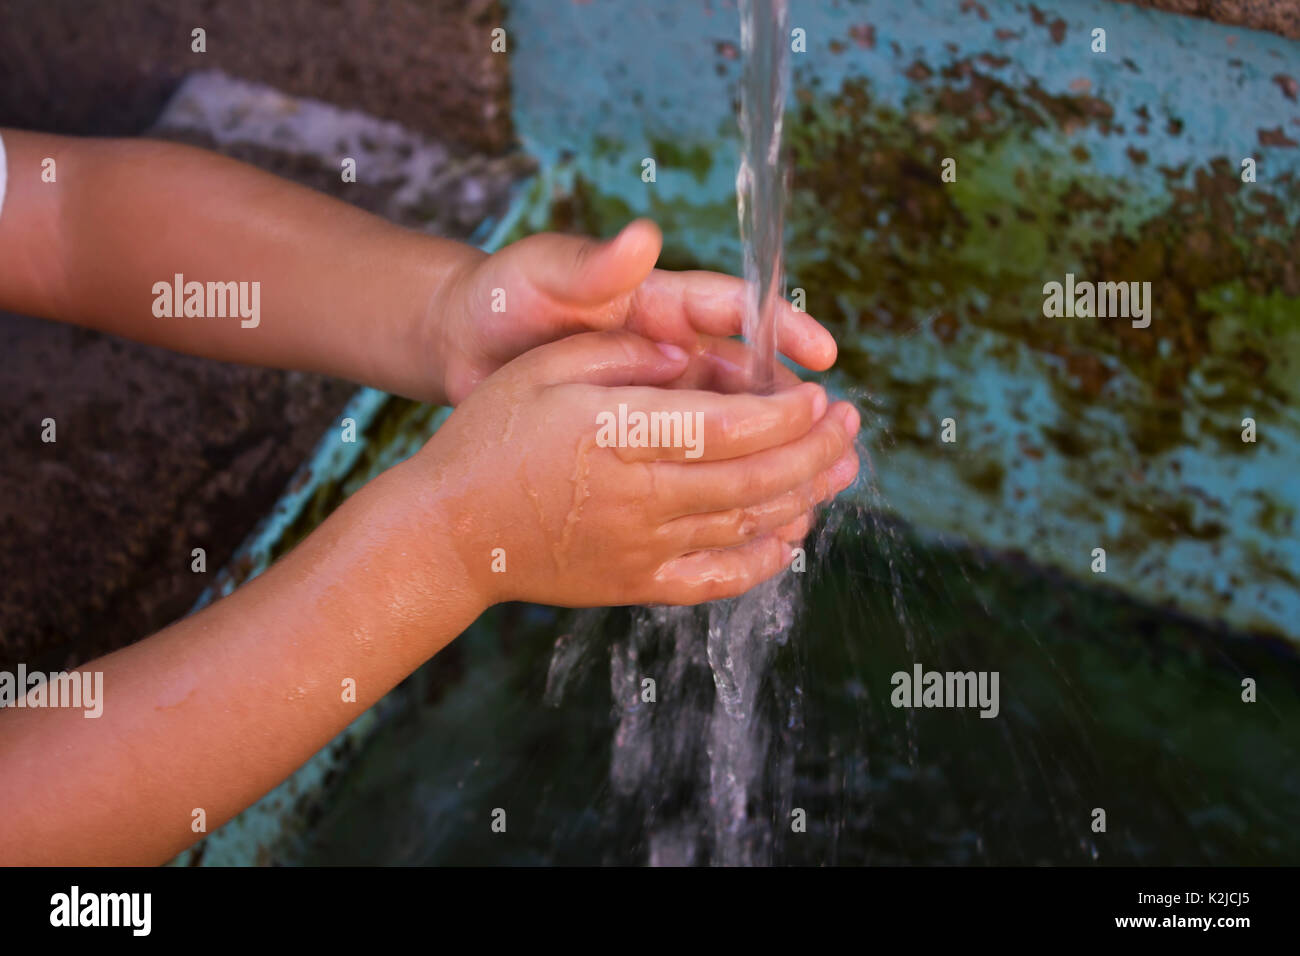 kid washing hand in public water fountain Stock Photo